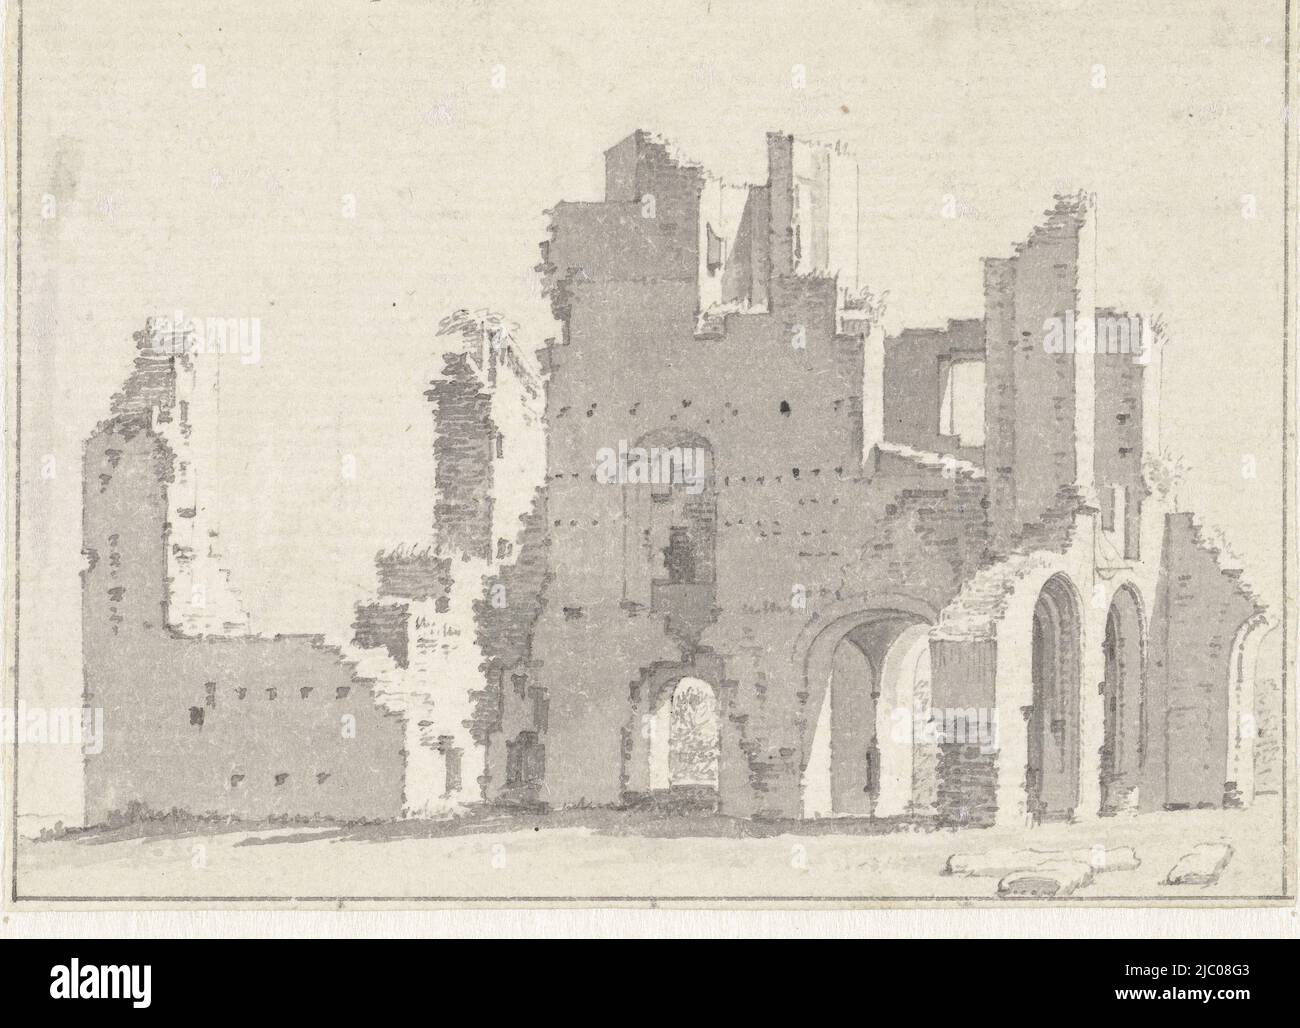 The ruin of the Abij at Rijnsburg, draughtsman: Cornelis Pronk, 1725 - 1745, paper, pen, brush, h 73 mm × w 102 mm Stock Photo